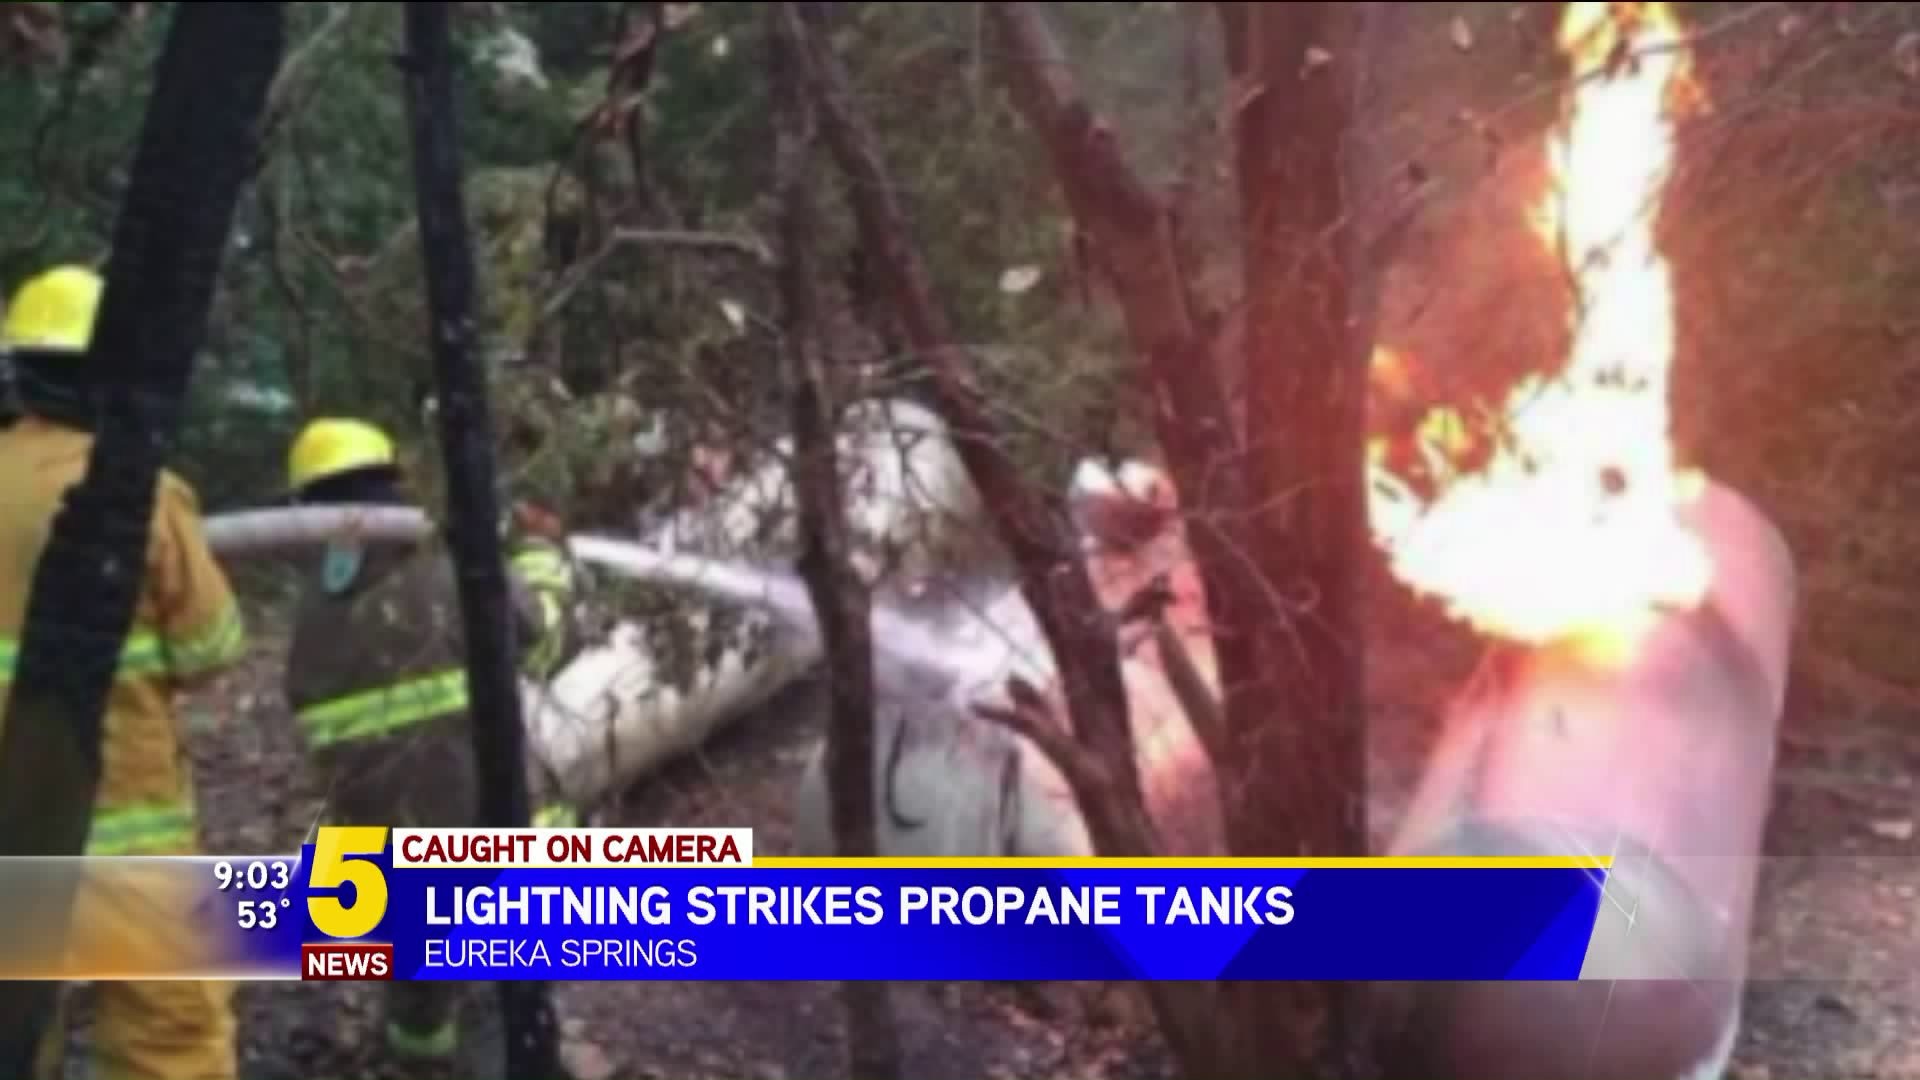 Eureka Springs Propane Tanks Catch Fire